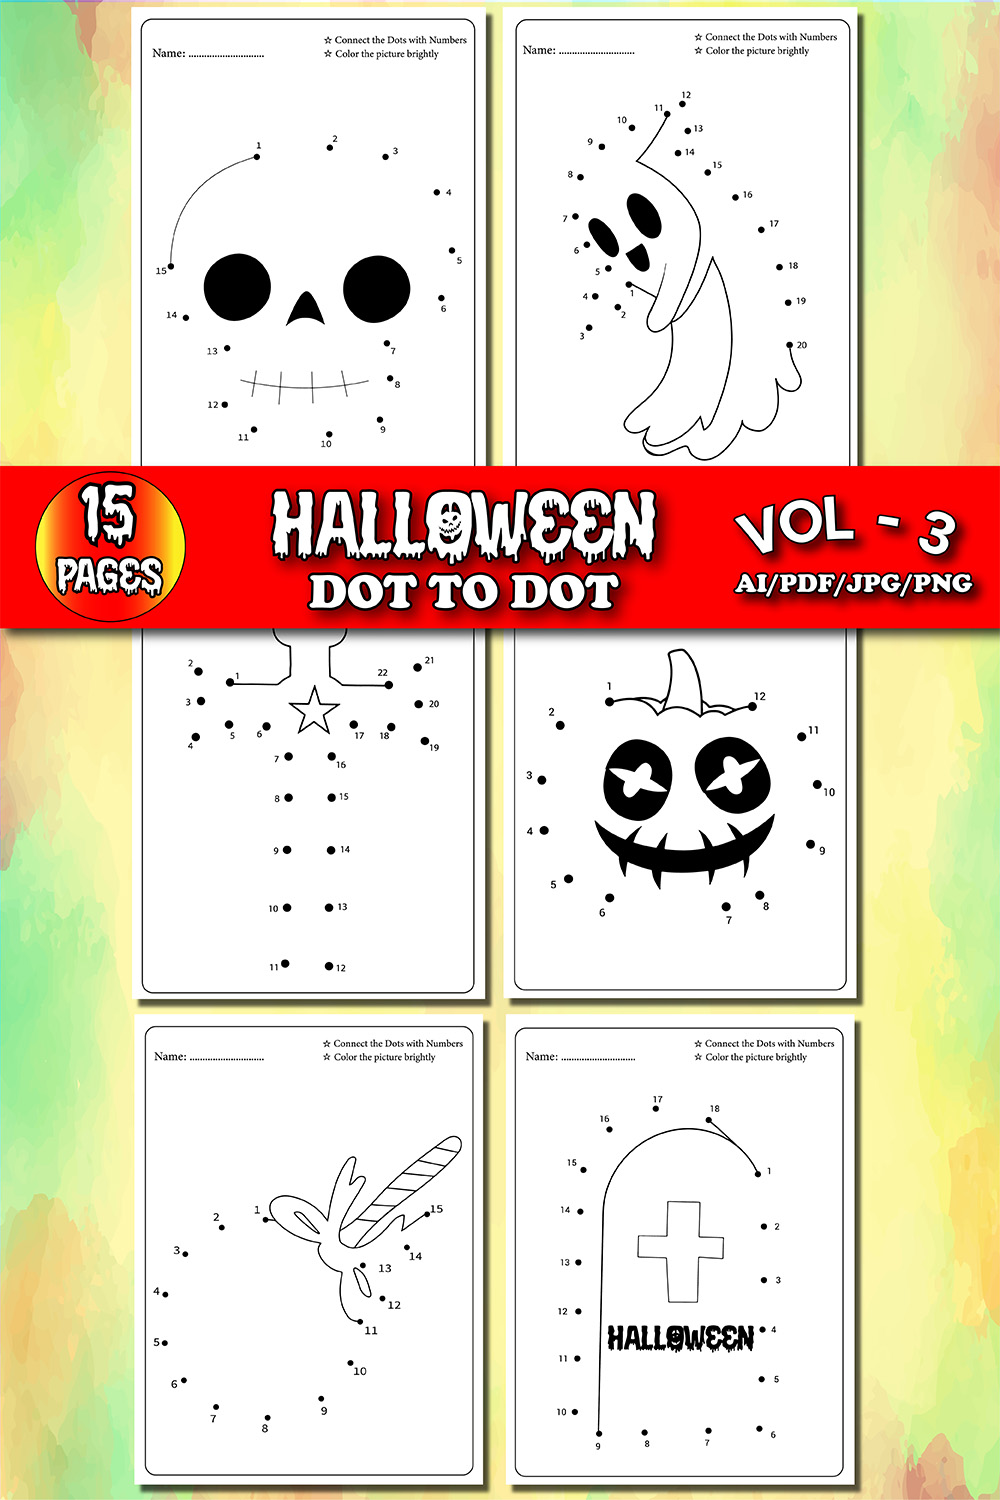 Halloween Dot To Dot For Kids Vol - 3 printerest image.